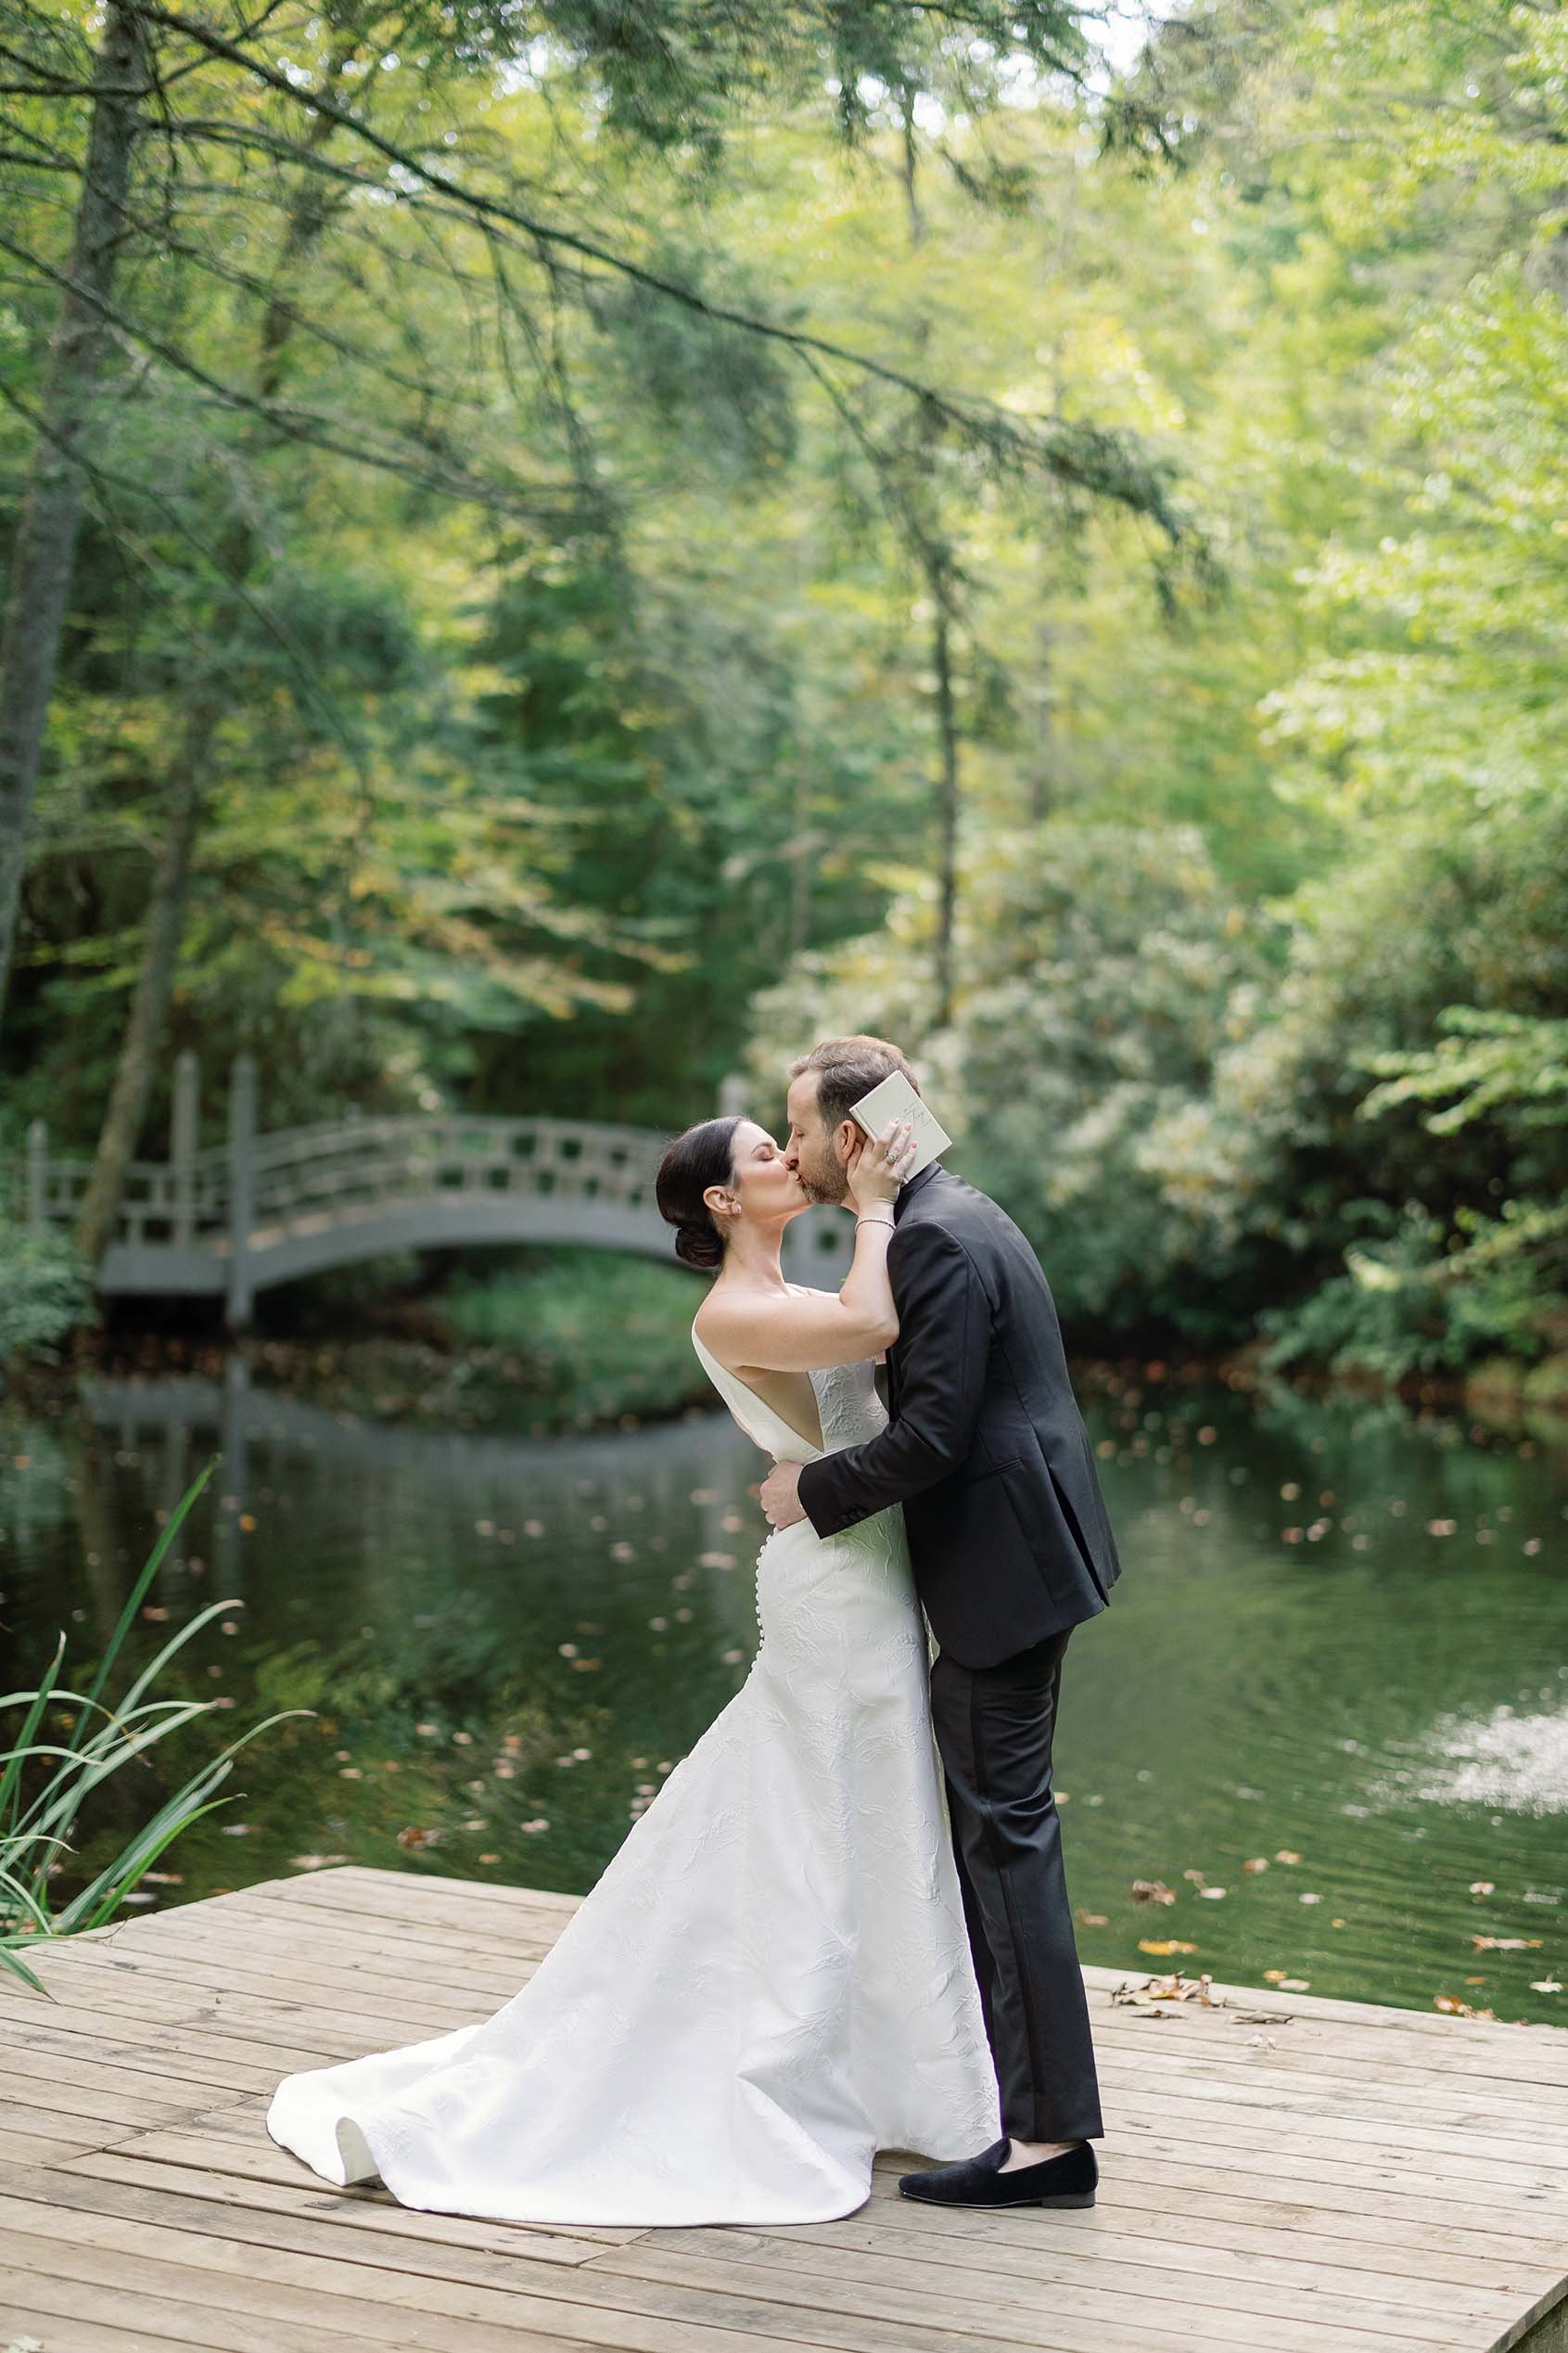 Rachel & Trey_s Wedding (Highlights)_CadnacePhotography-53.jpg